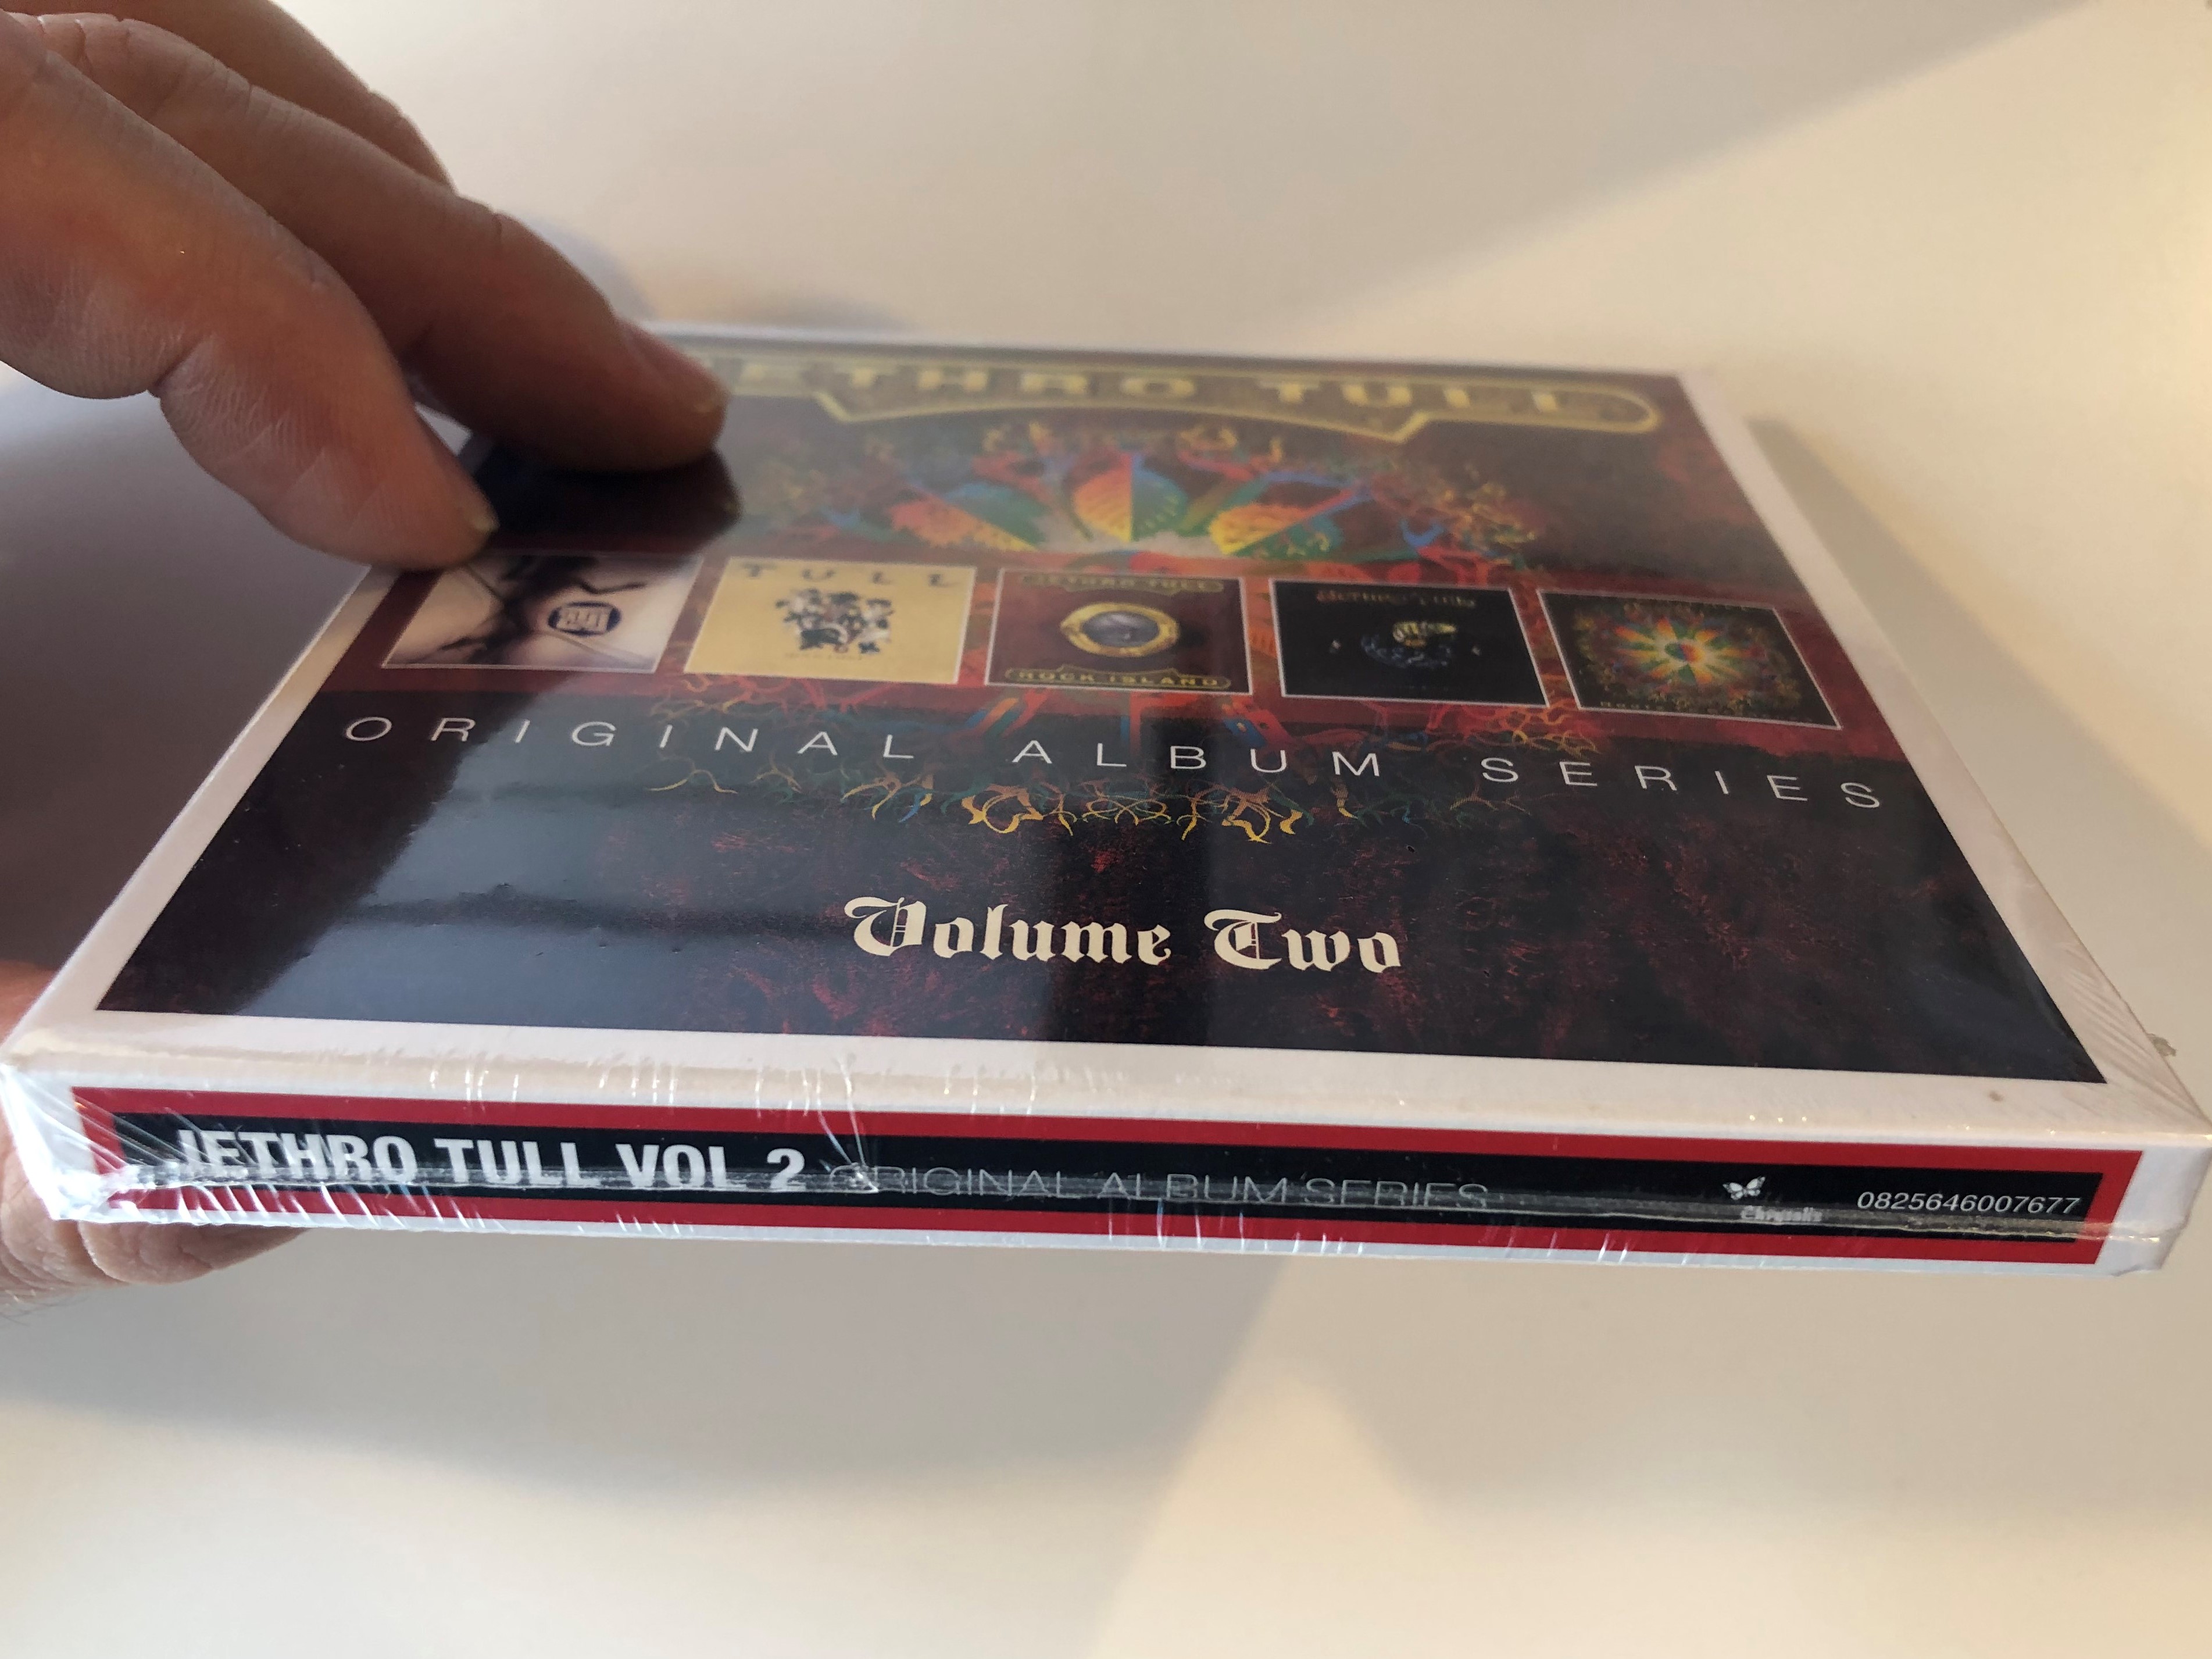 jethro-tull-original-album-series-volume-two-chrysalis-5x-audio-cd-2016-0825646007677-2-.jpg